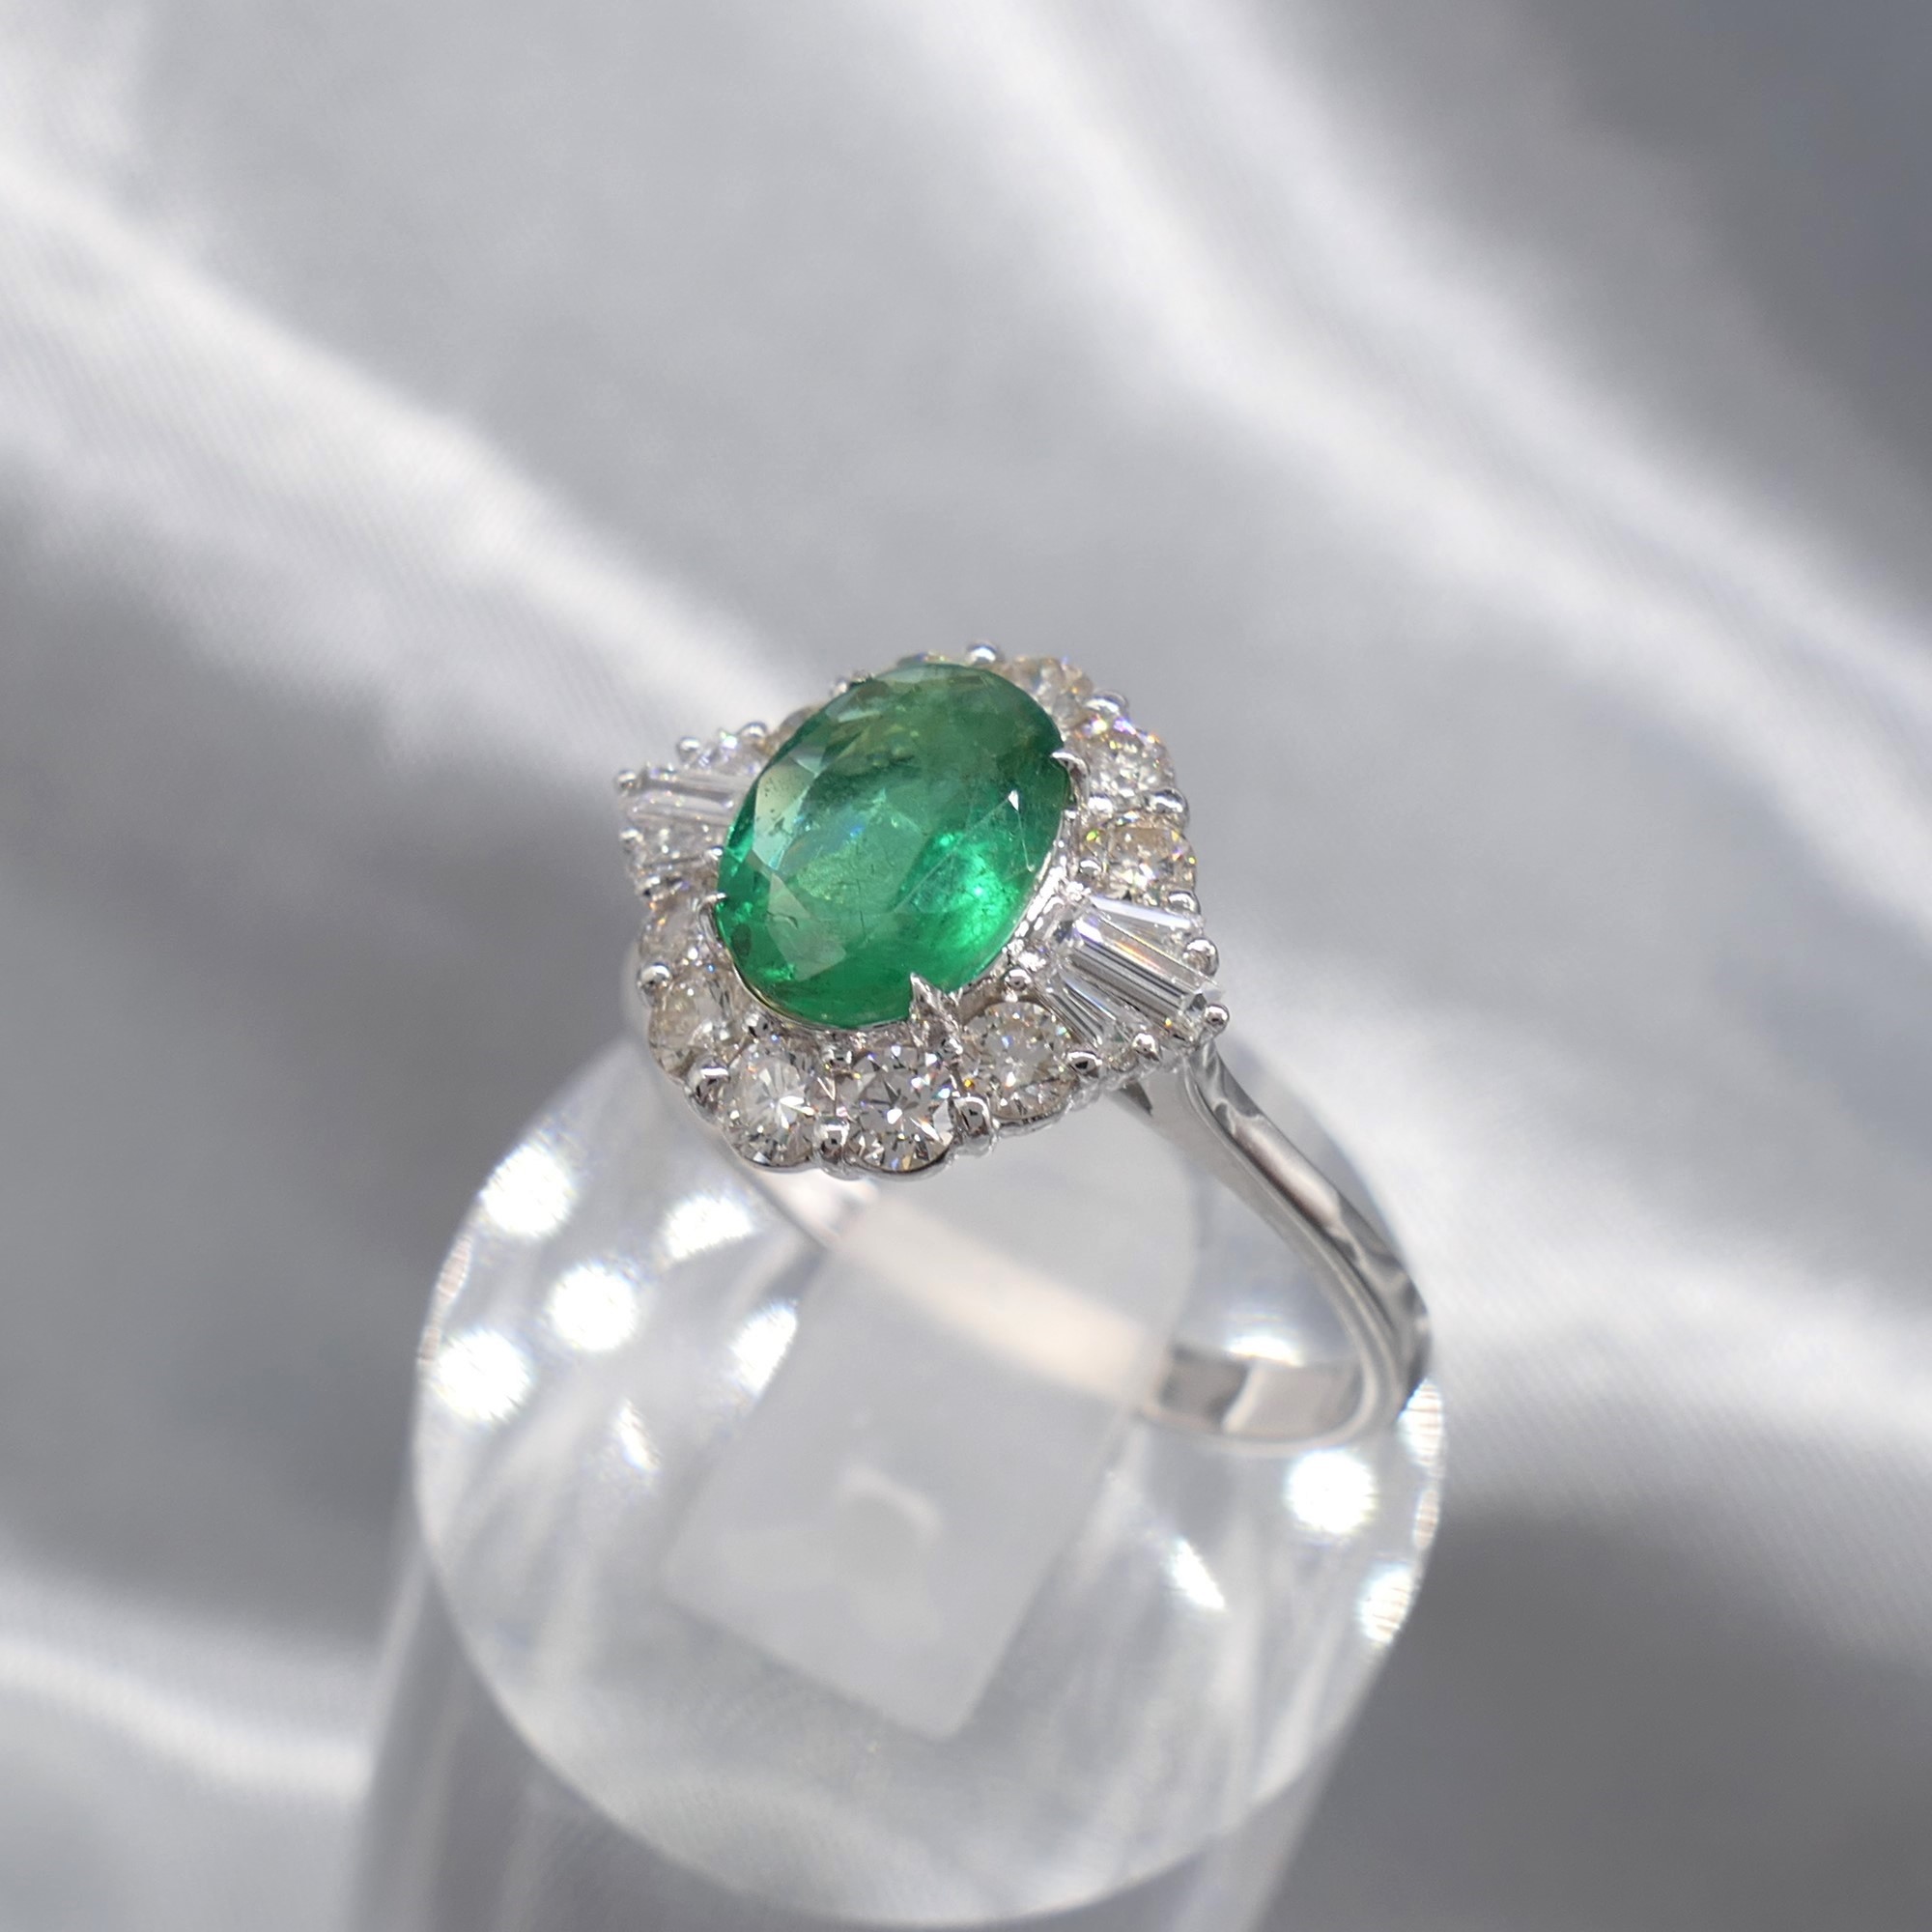 Stylish 1.05 carat emerald and diamond dress ring - Image 2 of 8